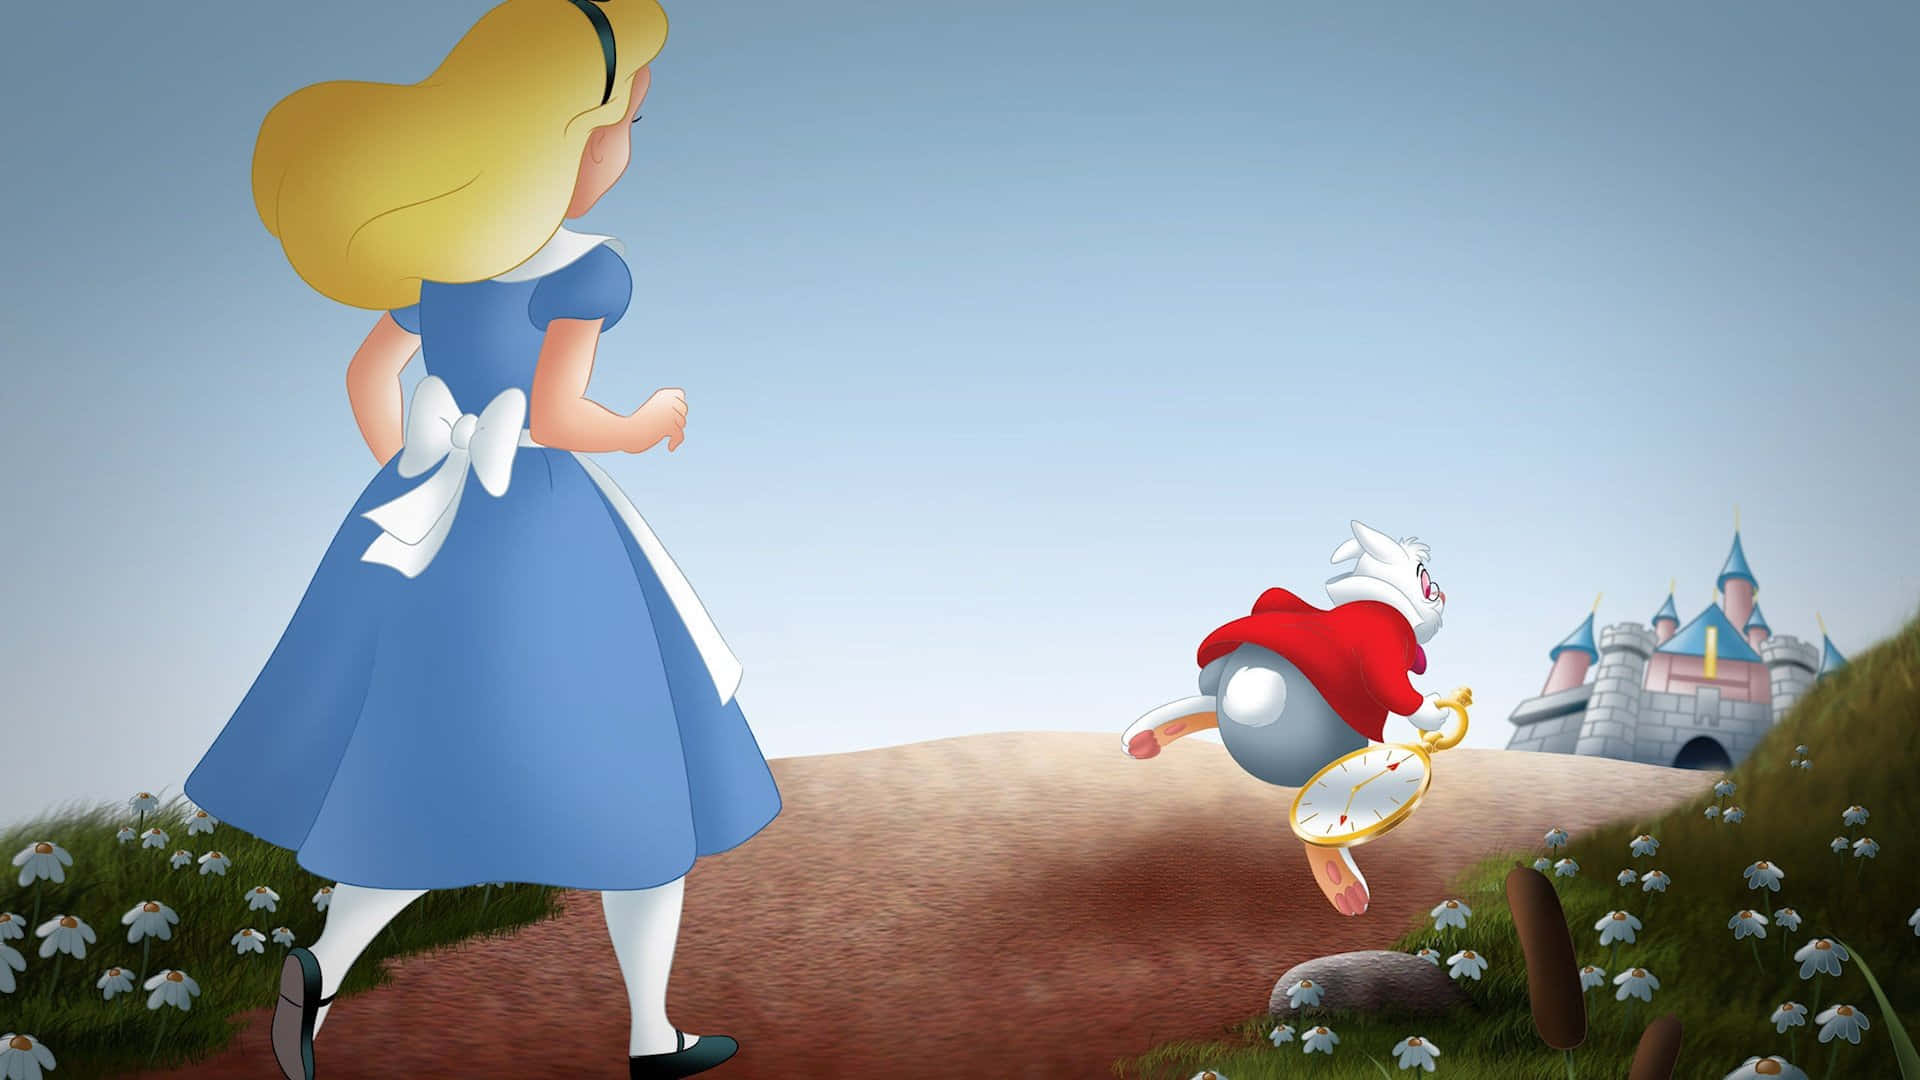 Follow Alice down the rabbit hole into the wonderland